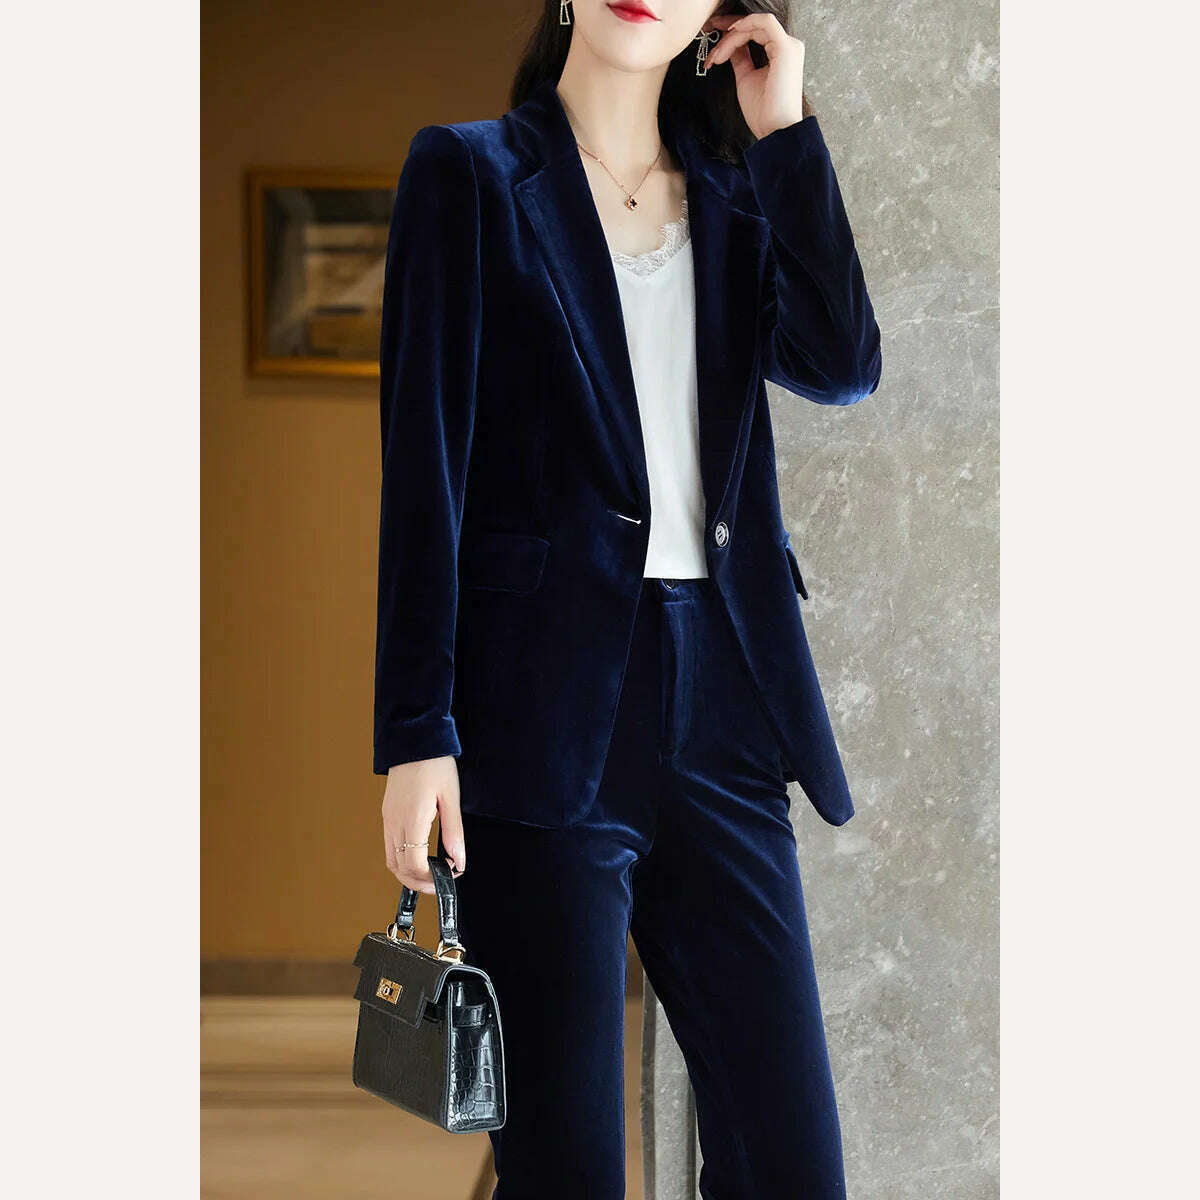 KIMLUD, Korean High-Quality Velvet Autumn Winter Formal Ladies Blazer Business Suits with Sets Work Wear Office Uniform Pants Jacket, KIMLUD Women's Clothes